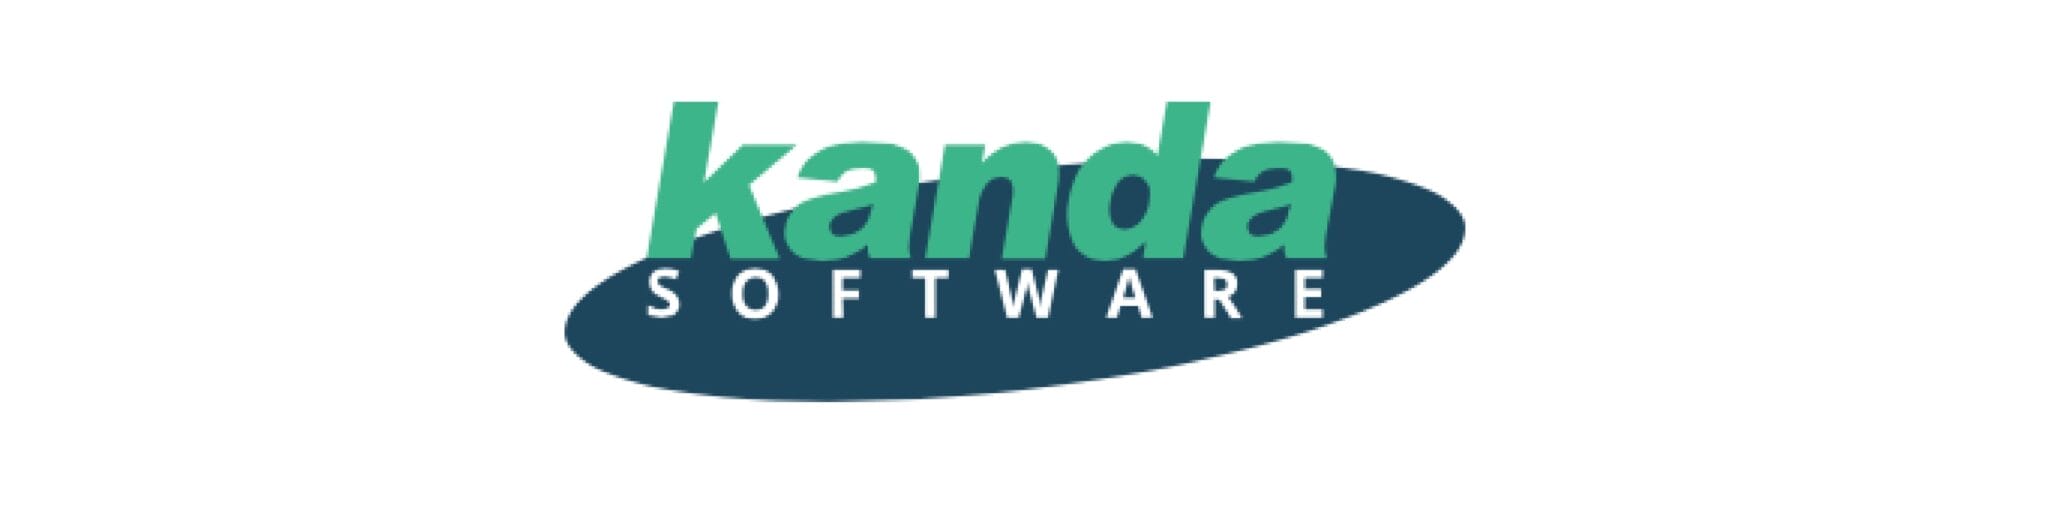 Kanda Software as a Top Healthcare Software Development Company